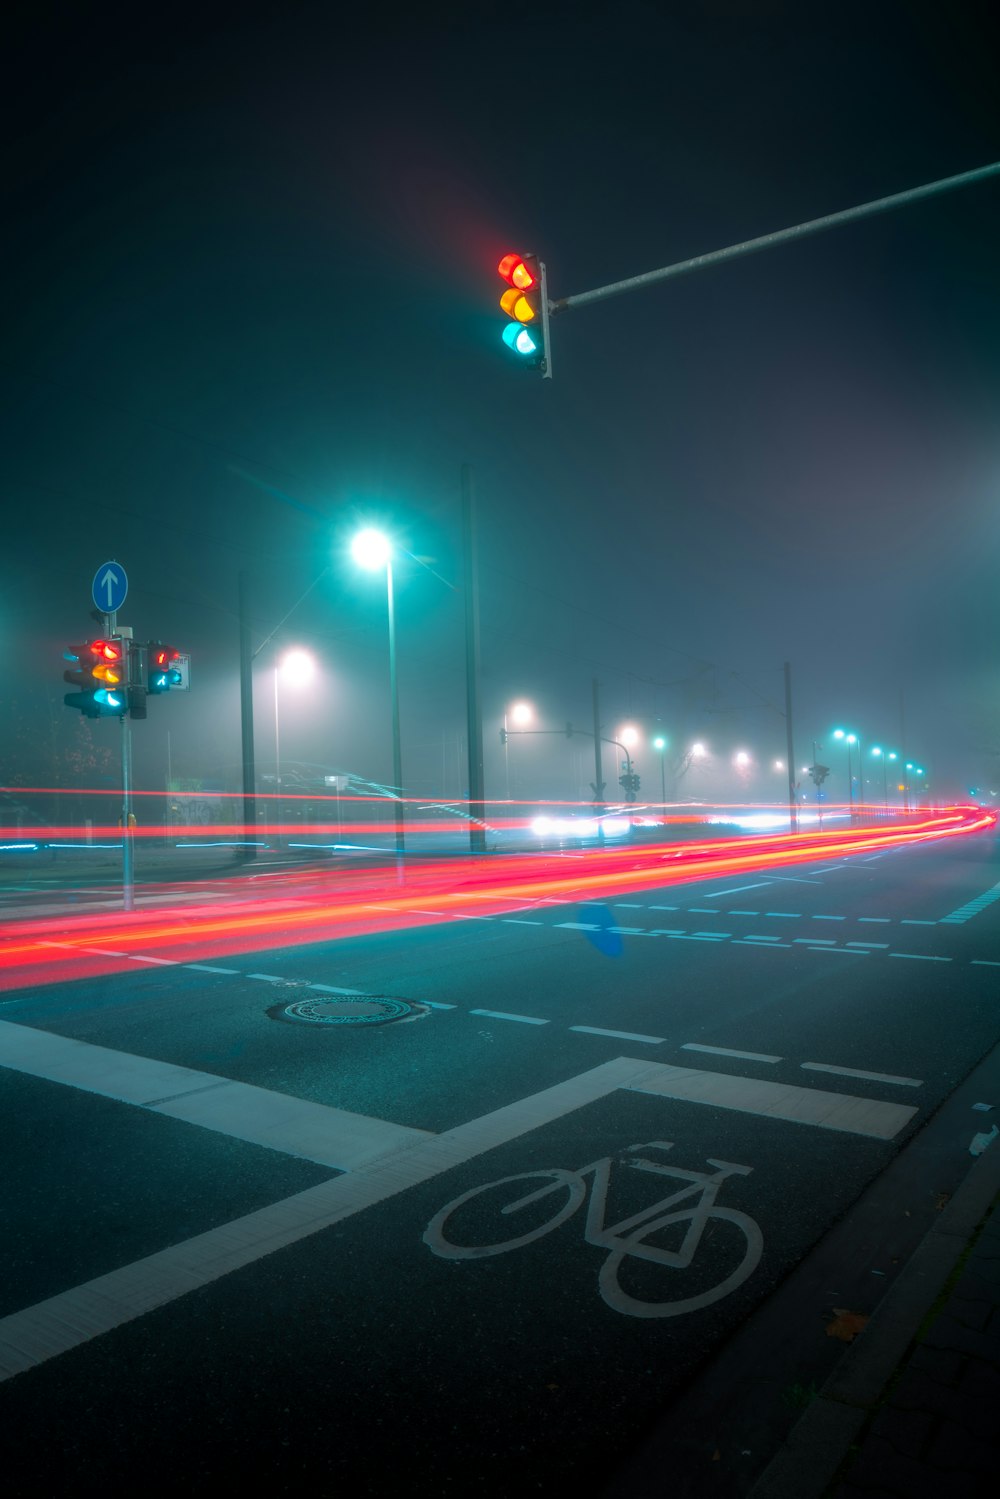 a bicycle lane is lit up at night